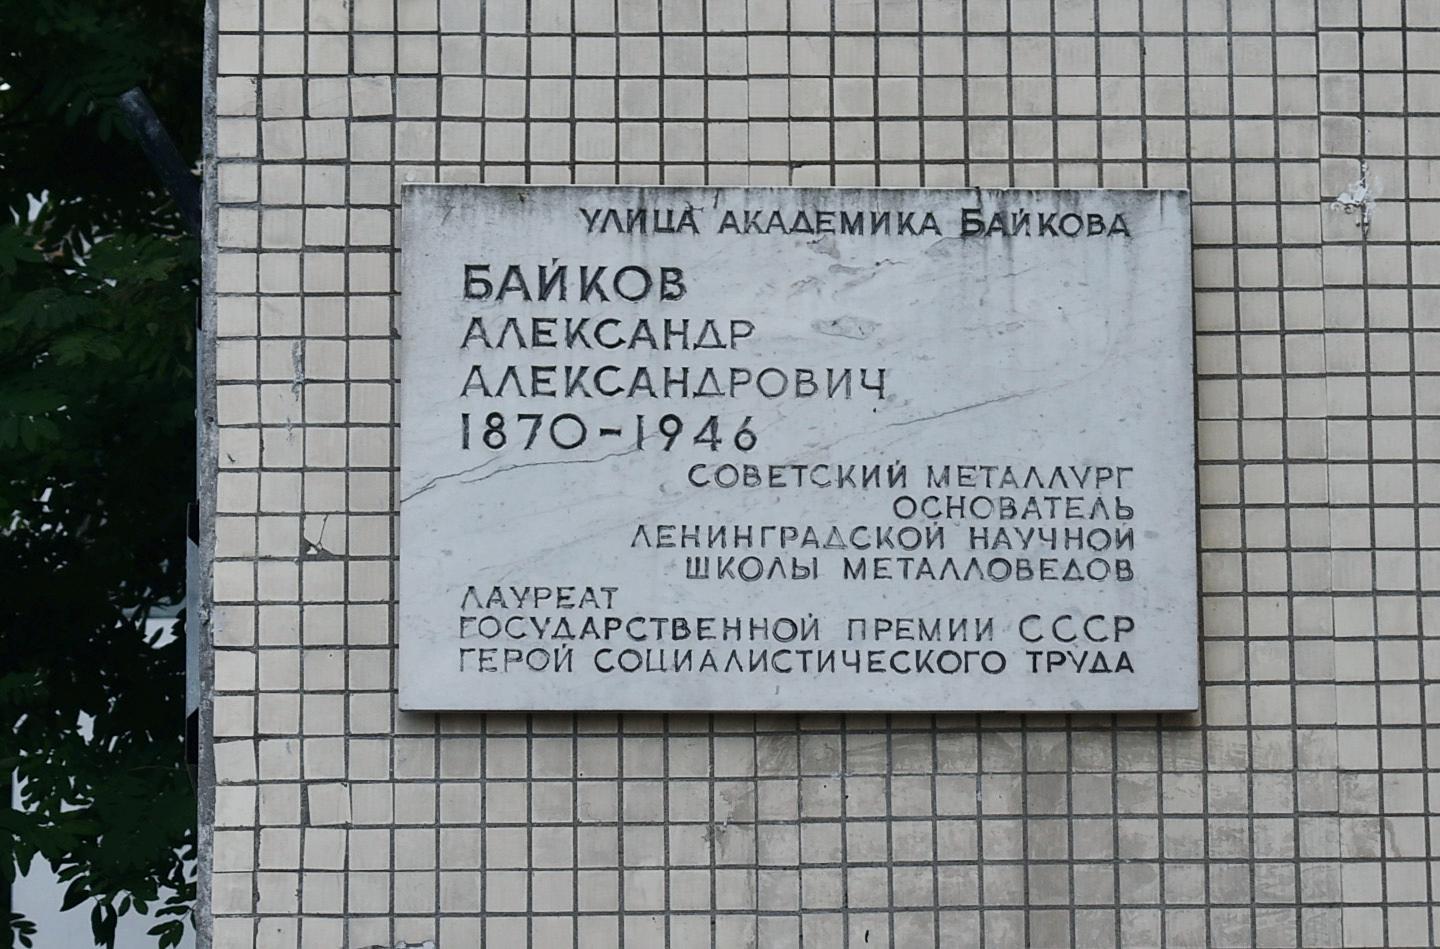 Petersburg, Улица Академика Байкова, 1. Petersburg — Memorial plaques